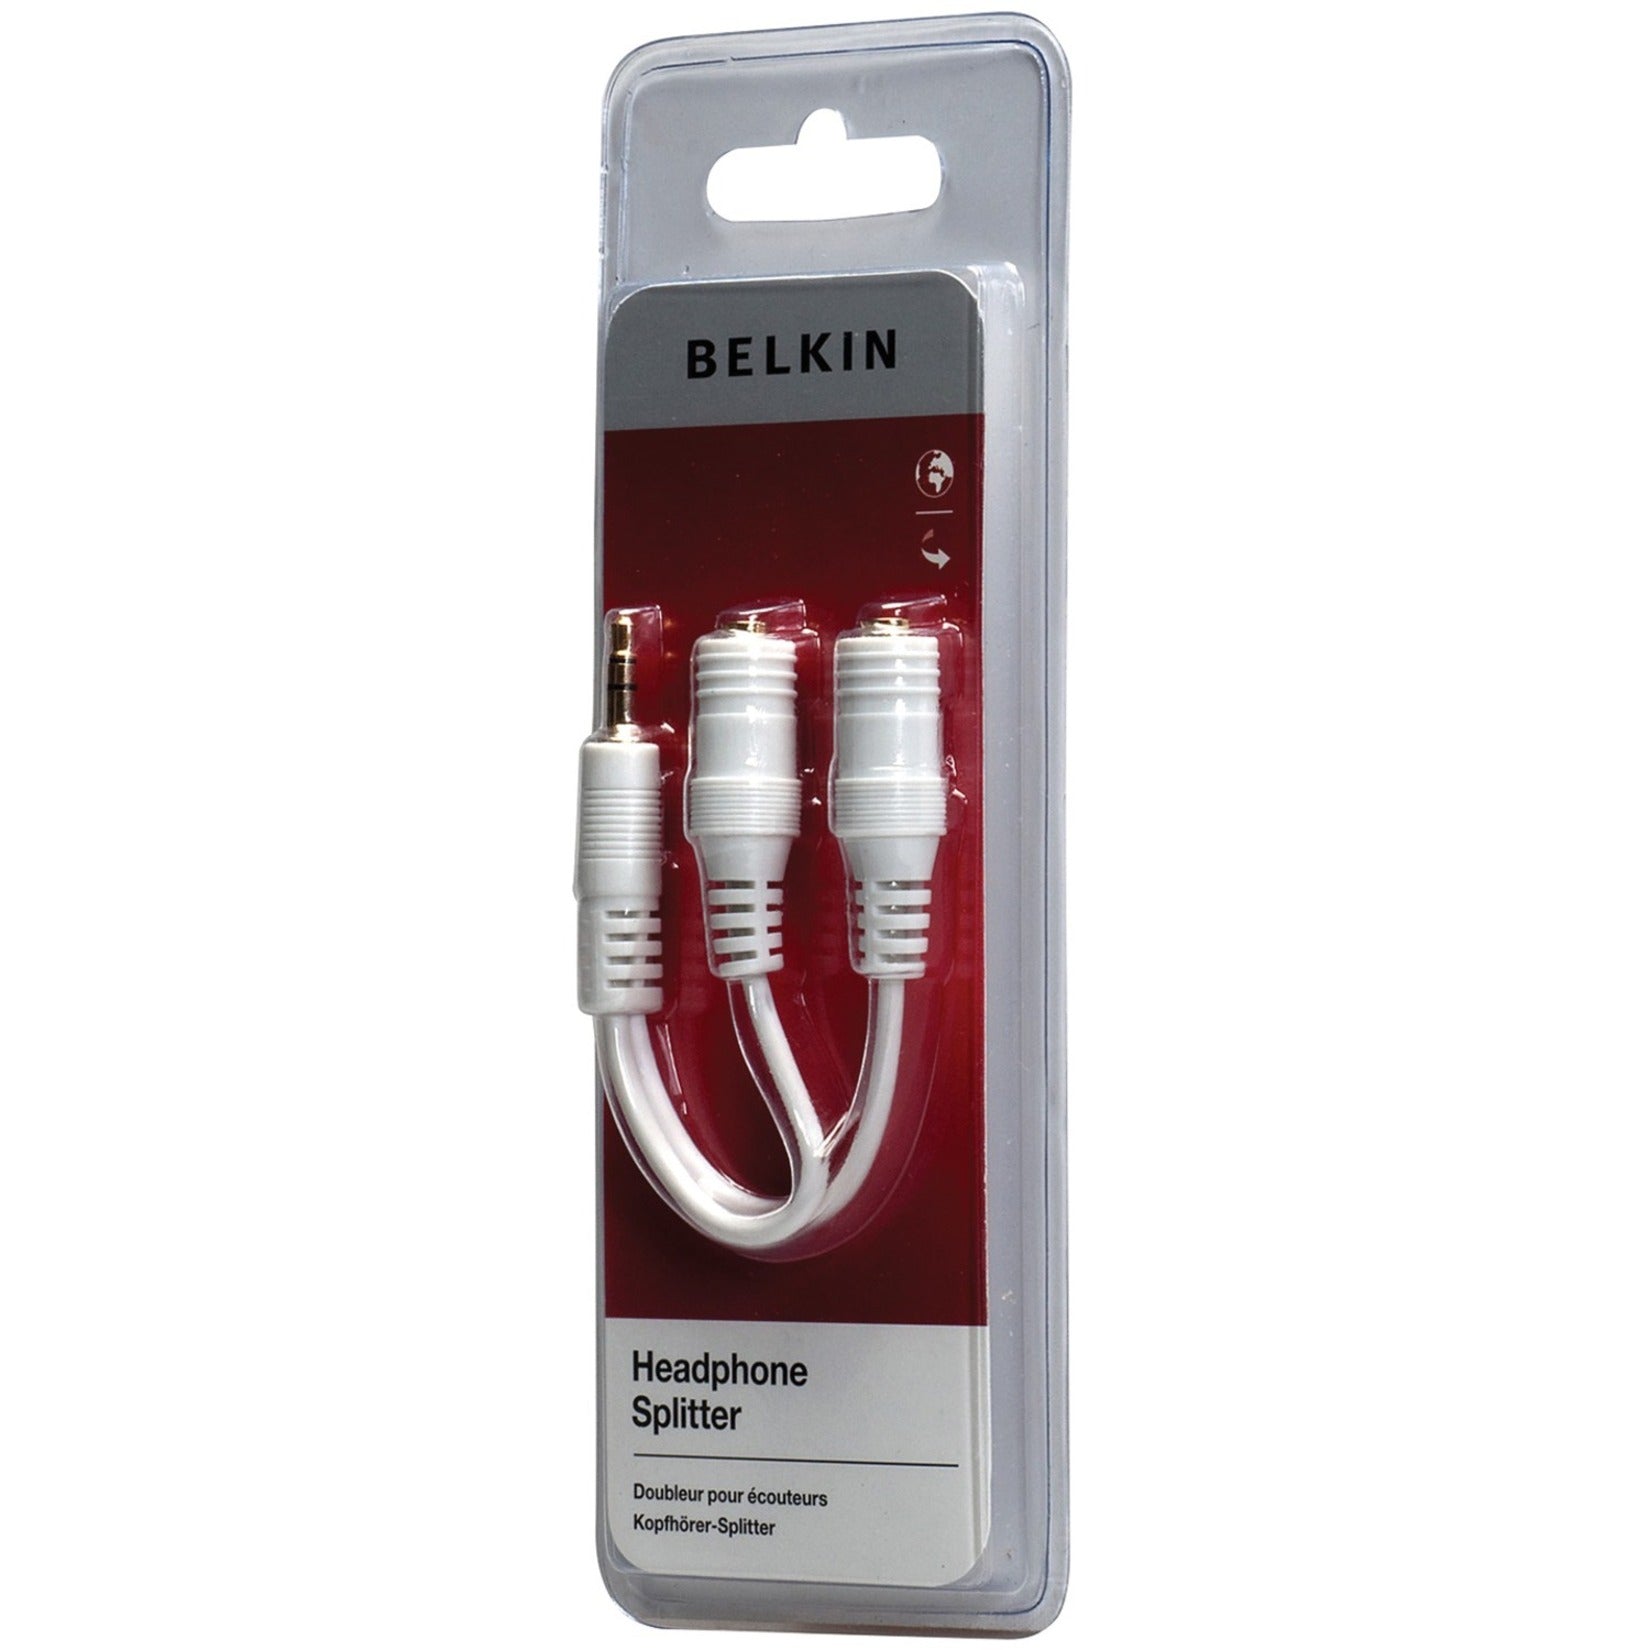 Belkin F8V234 Speaker and Headphone Splitter, 2-Way Audio Cable, Black